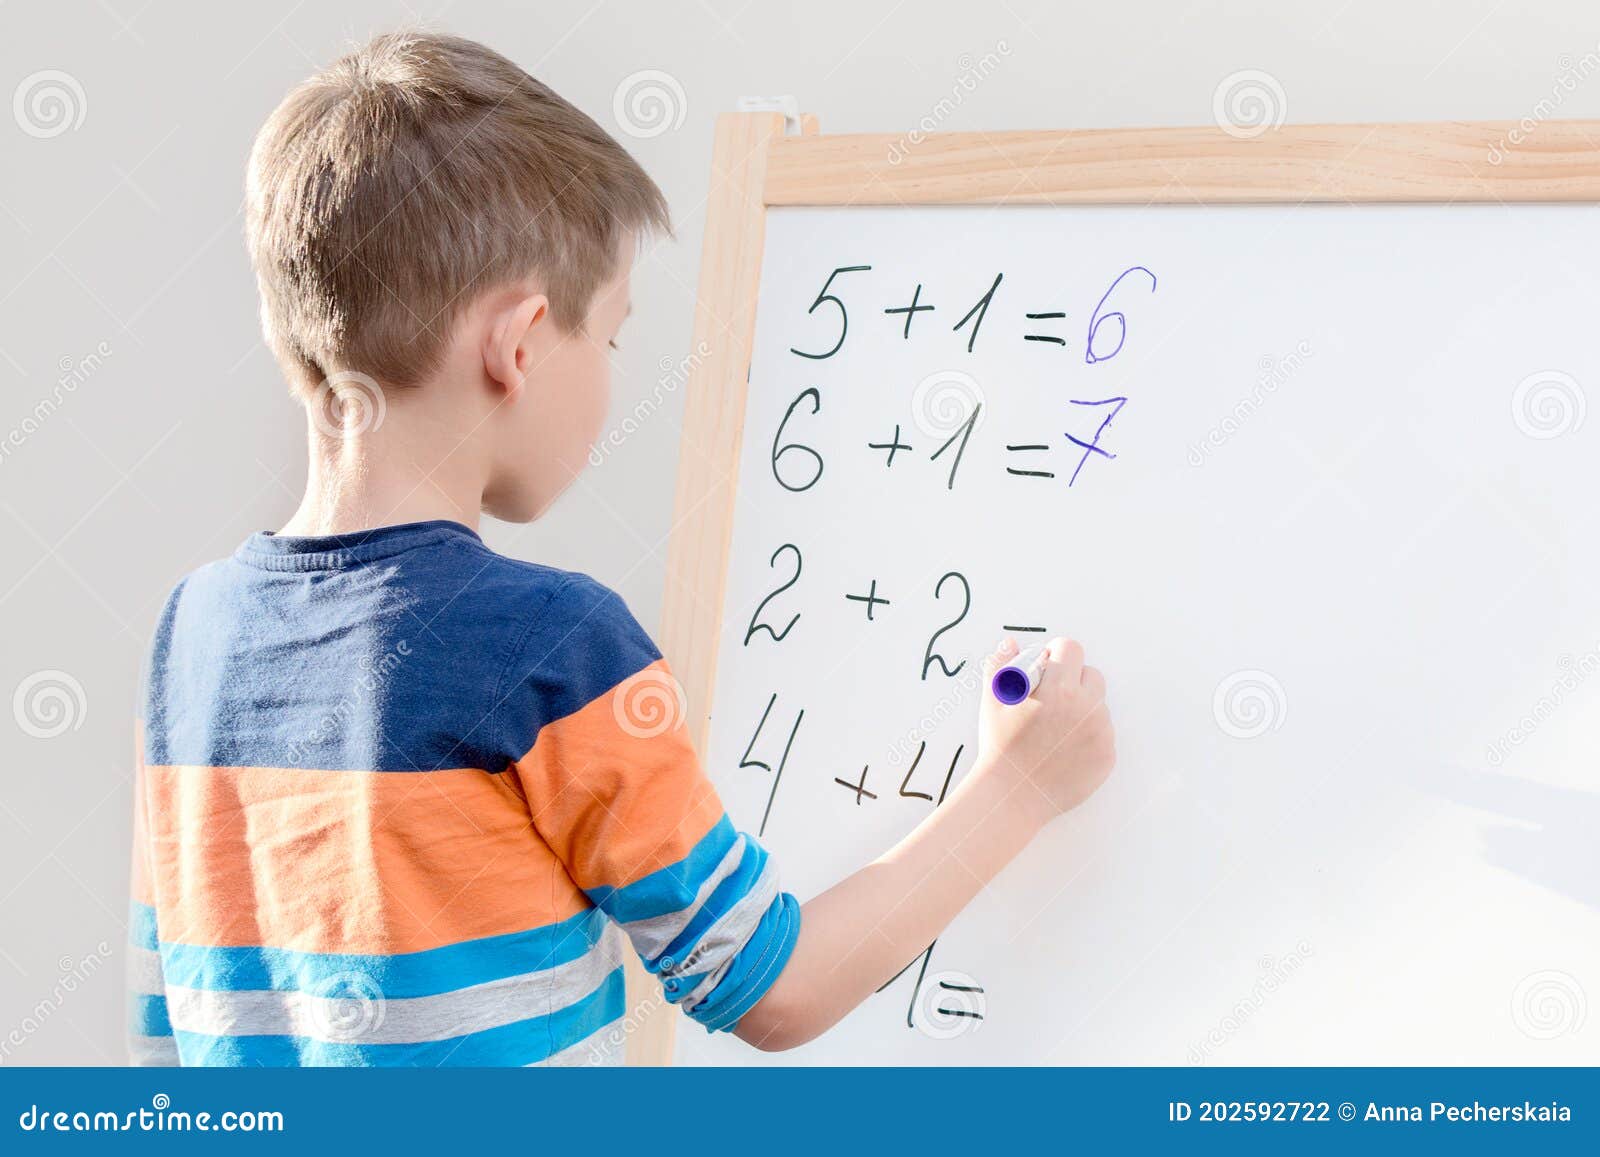 Математика в домашних условиях. Картина где дети решают пример на доске. Фото как дети решают примеры. Математика дети решают. Школьная доска с примерами по математике.